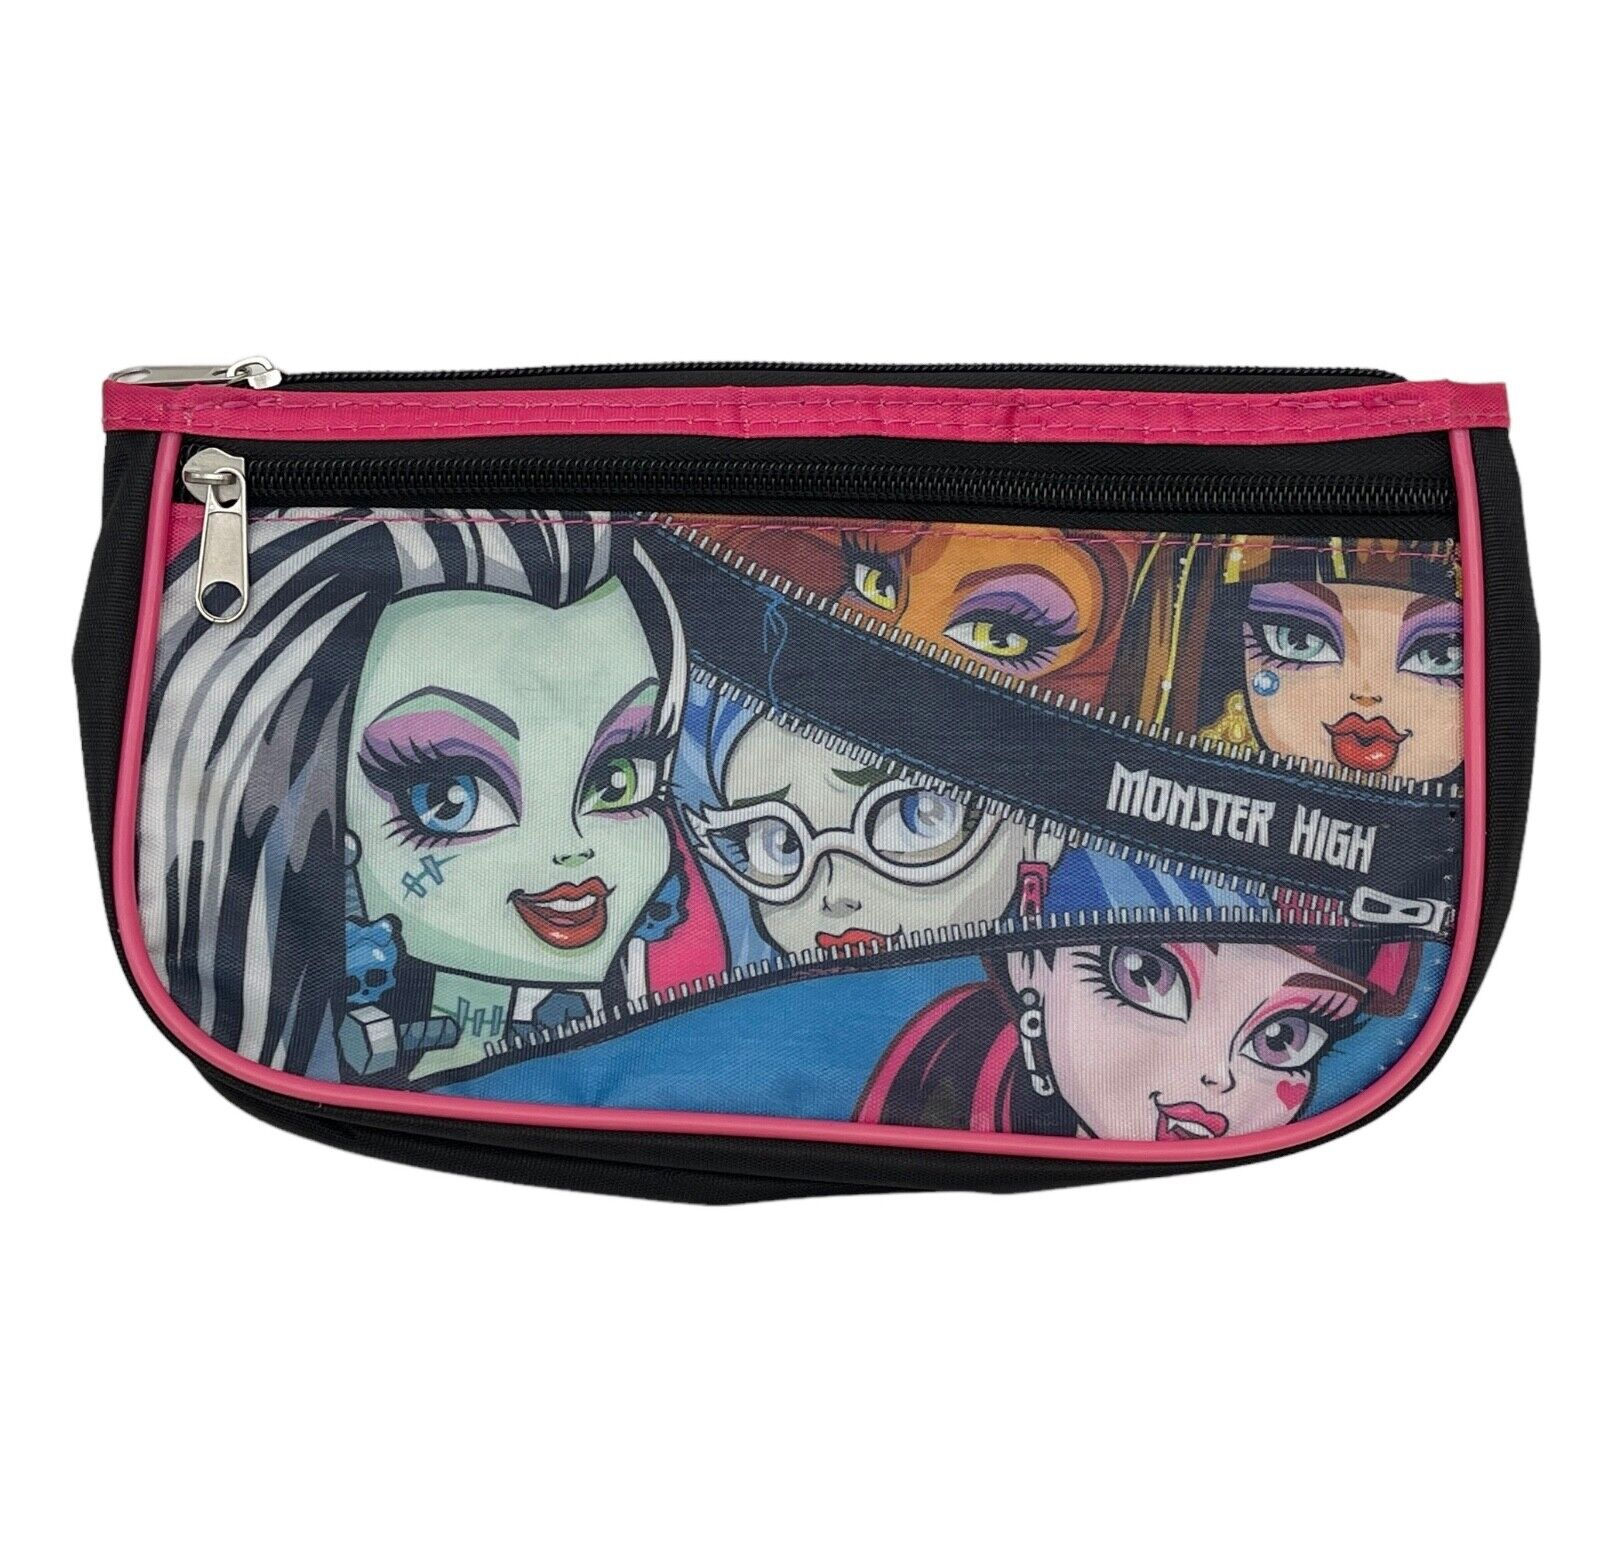 2014 Monster High Pencil Case Cosmetic Makeup Bag Gadget Case 10\